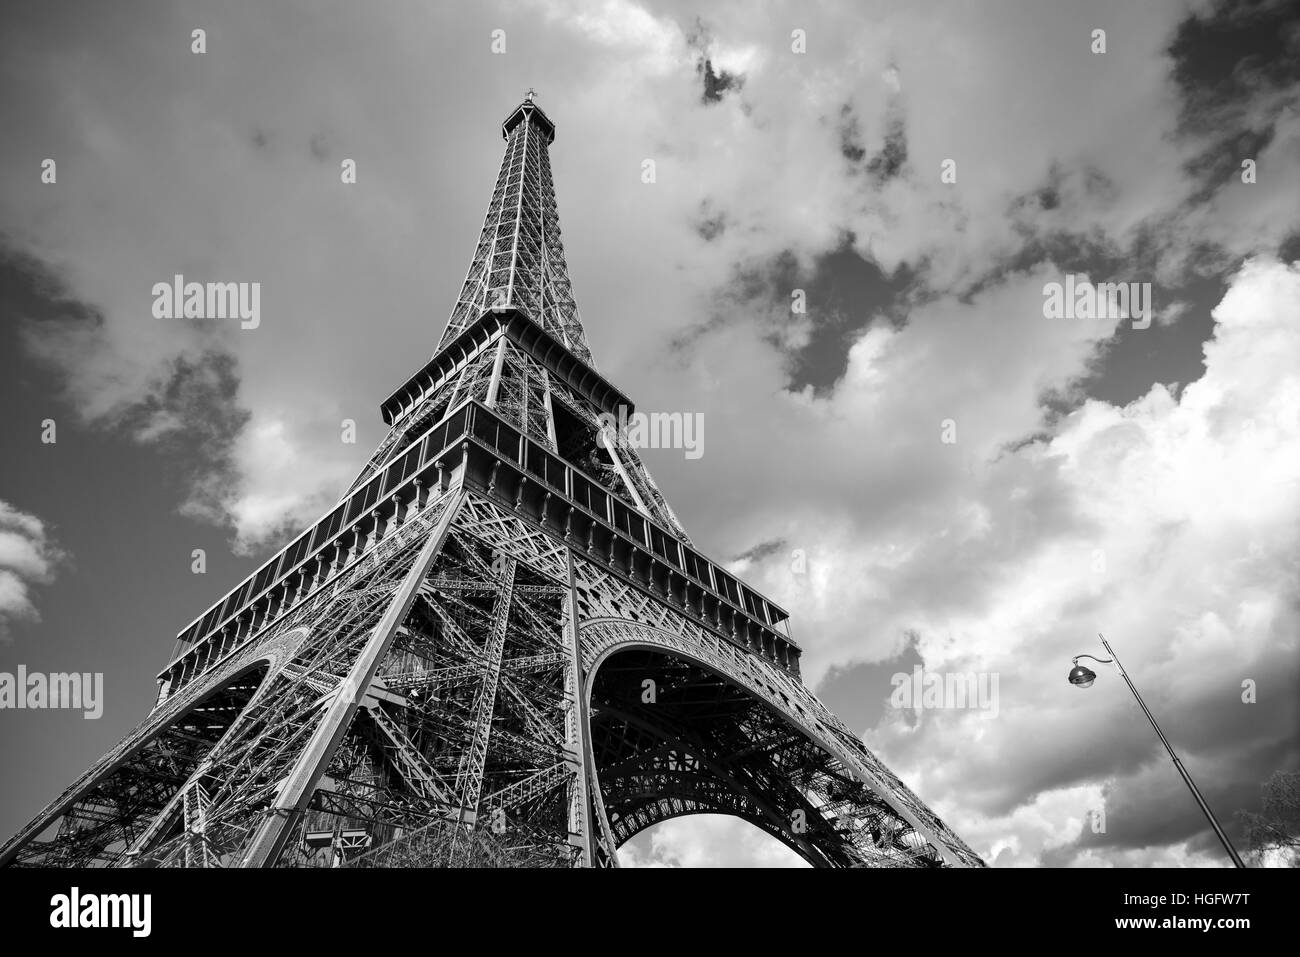 The Eiffel tower, Paris France Stock Photo